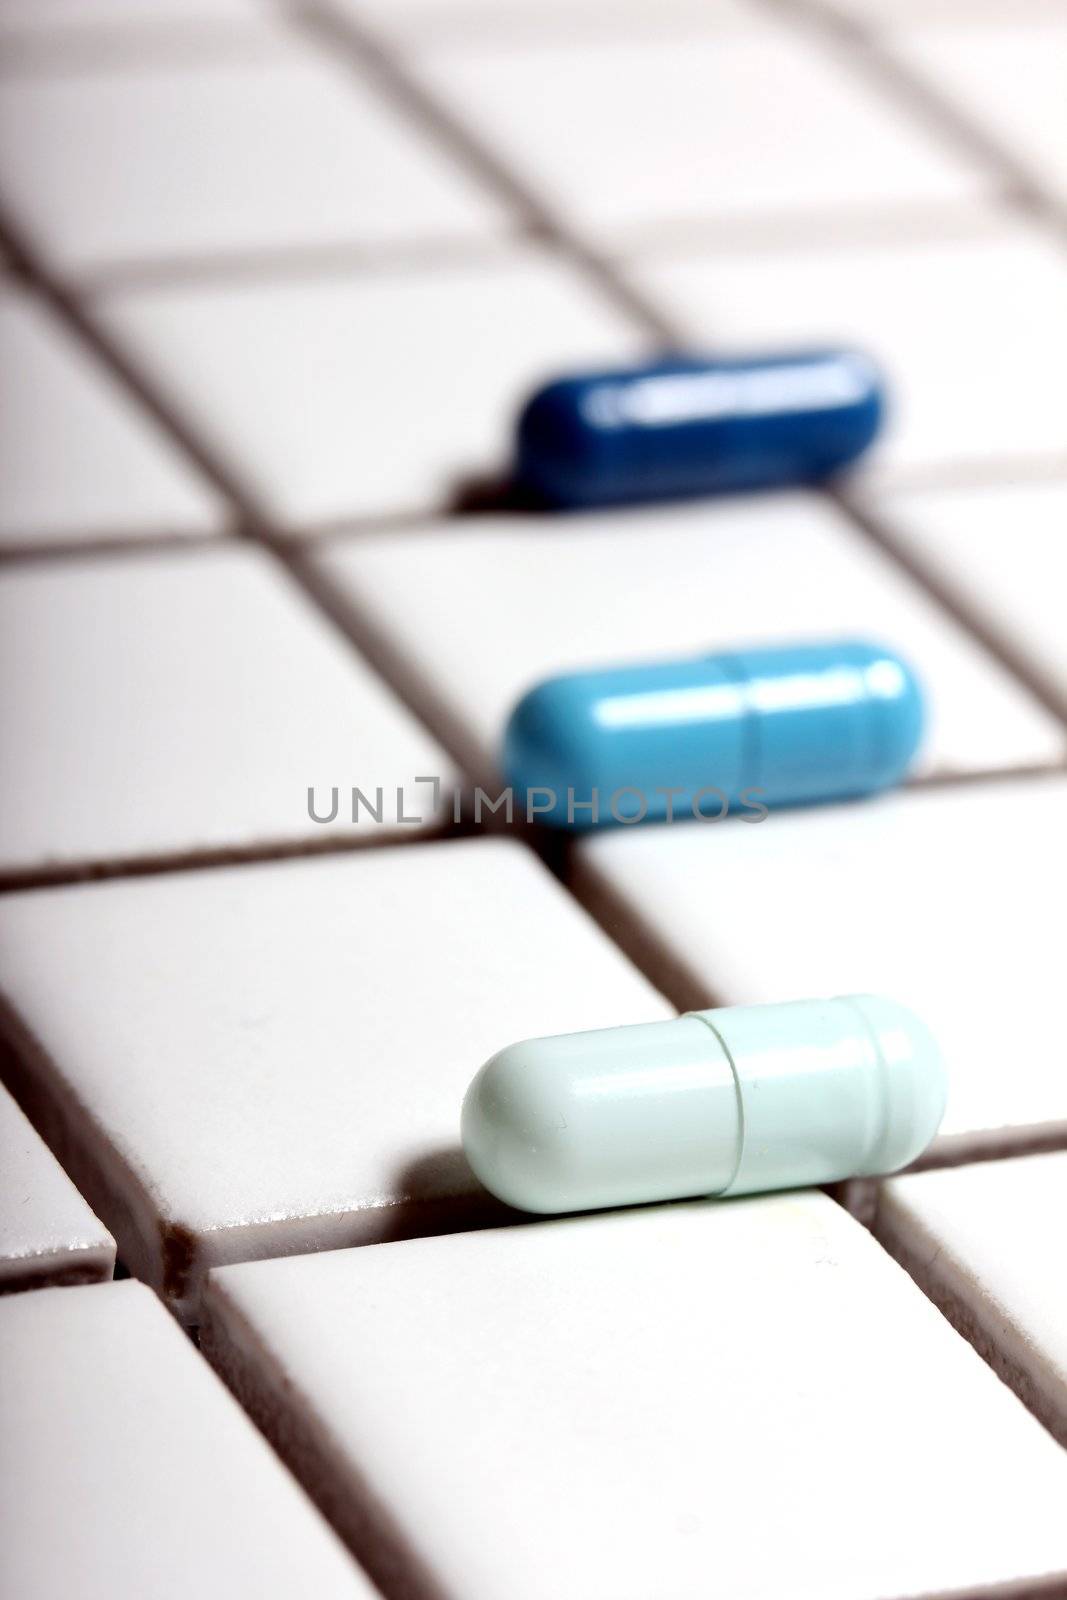 medicinical capsules by Teka77